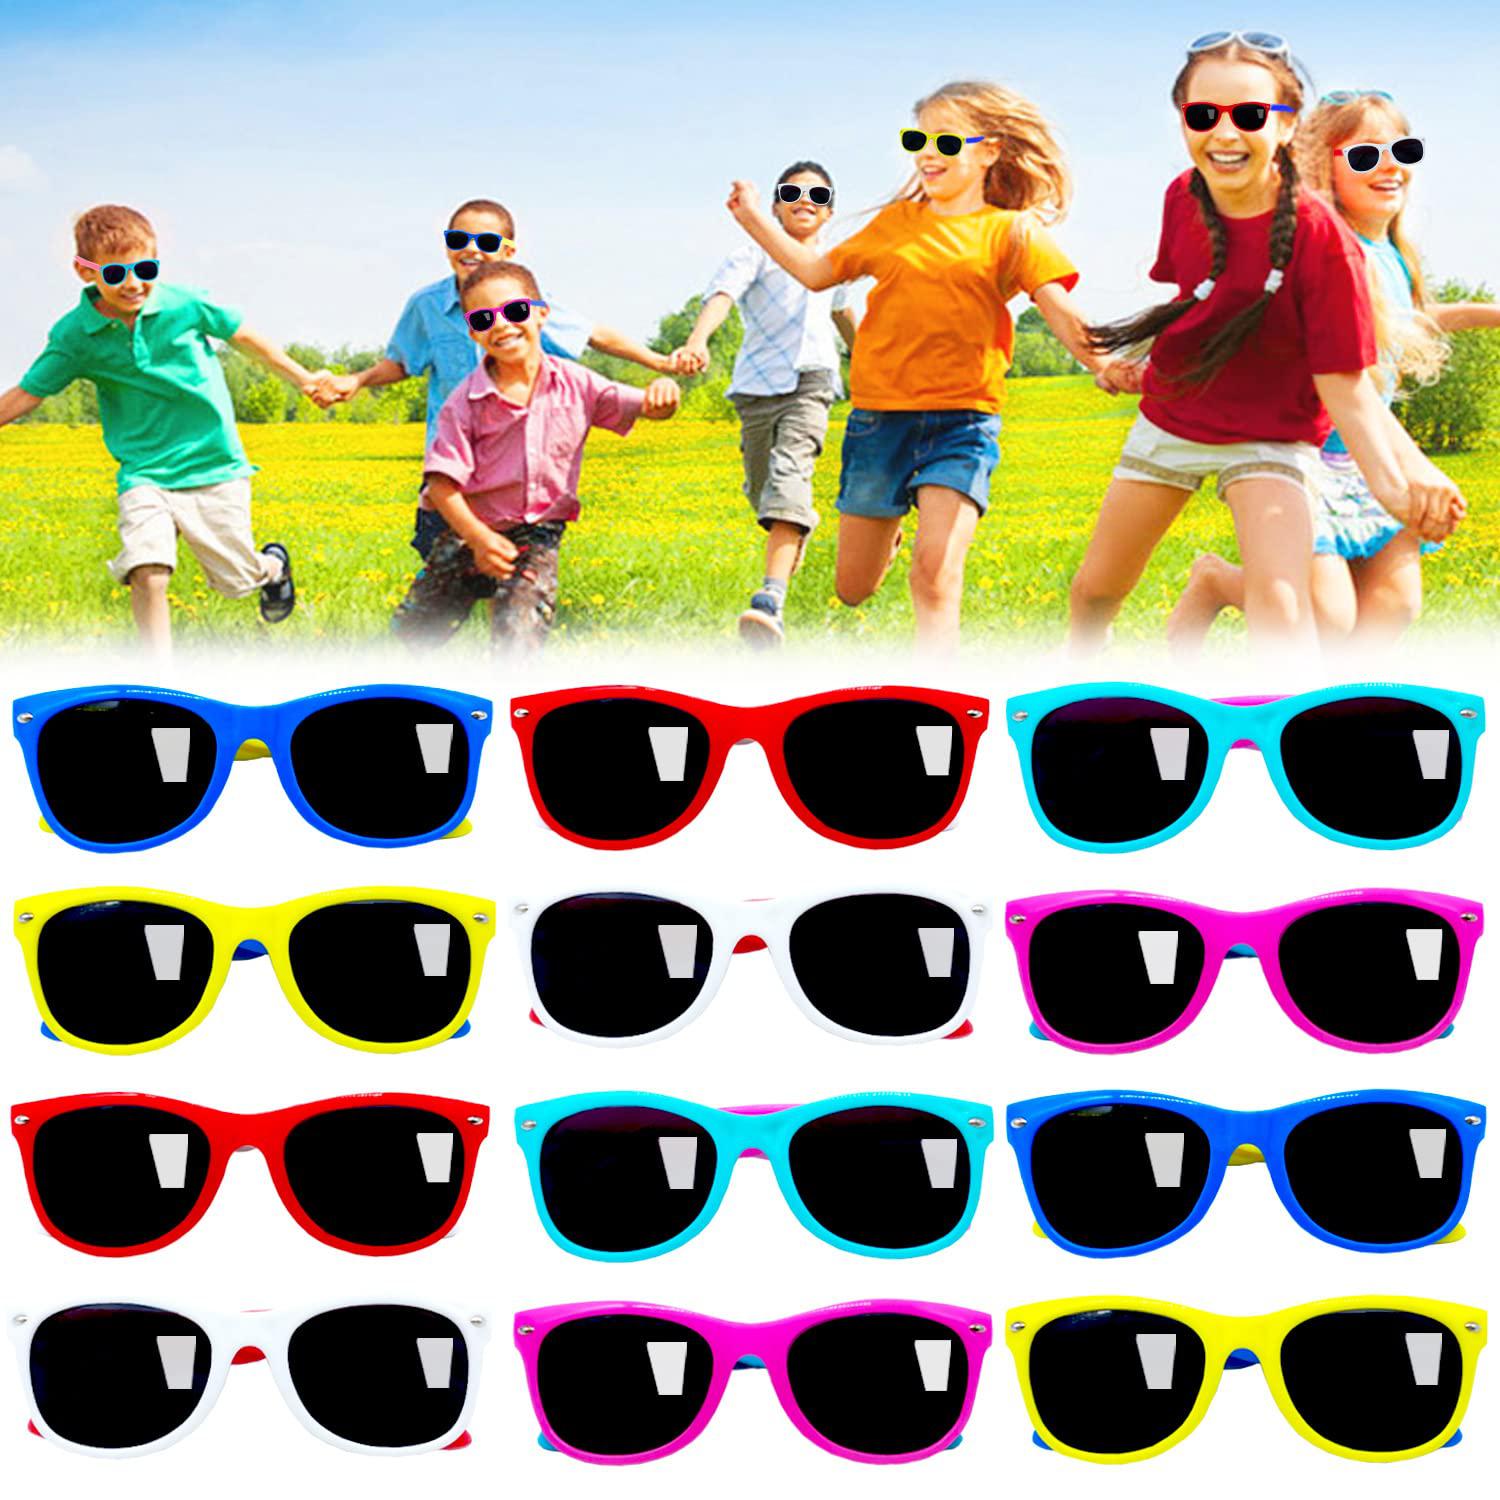 Baaxxango kids sunglasses party favors,neon sunglasses for kids,sunglasses bulk for boys and girls beach,birthday party supplies,pool p